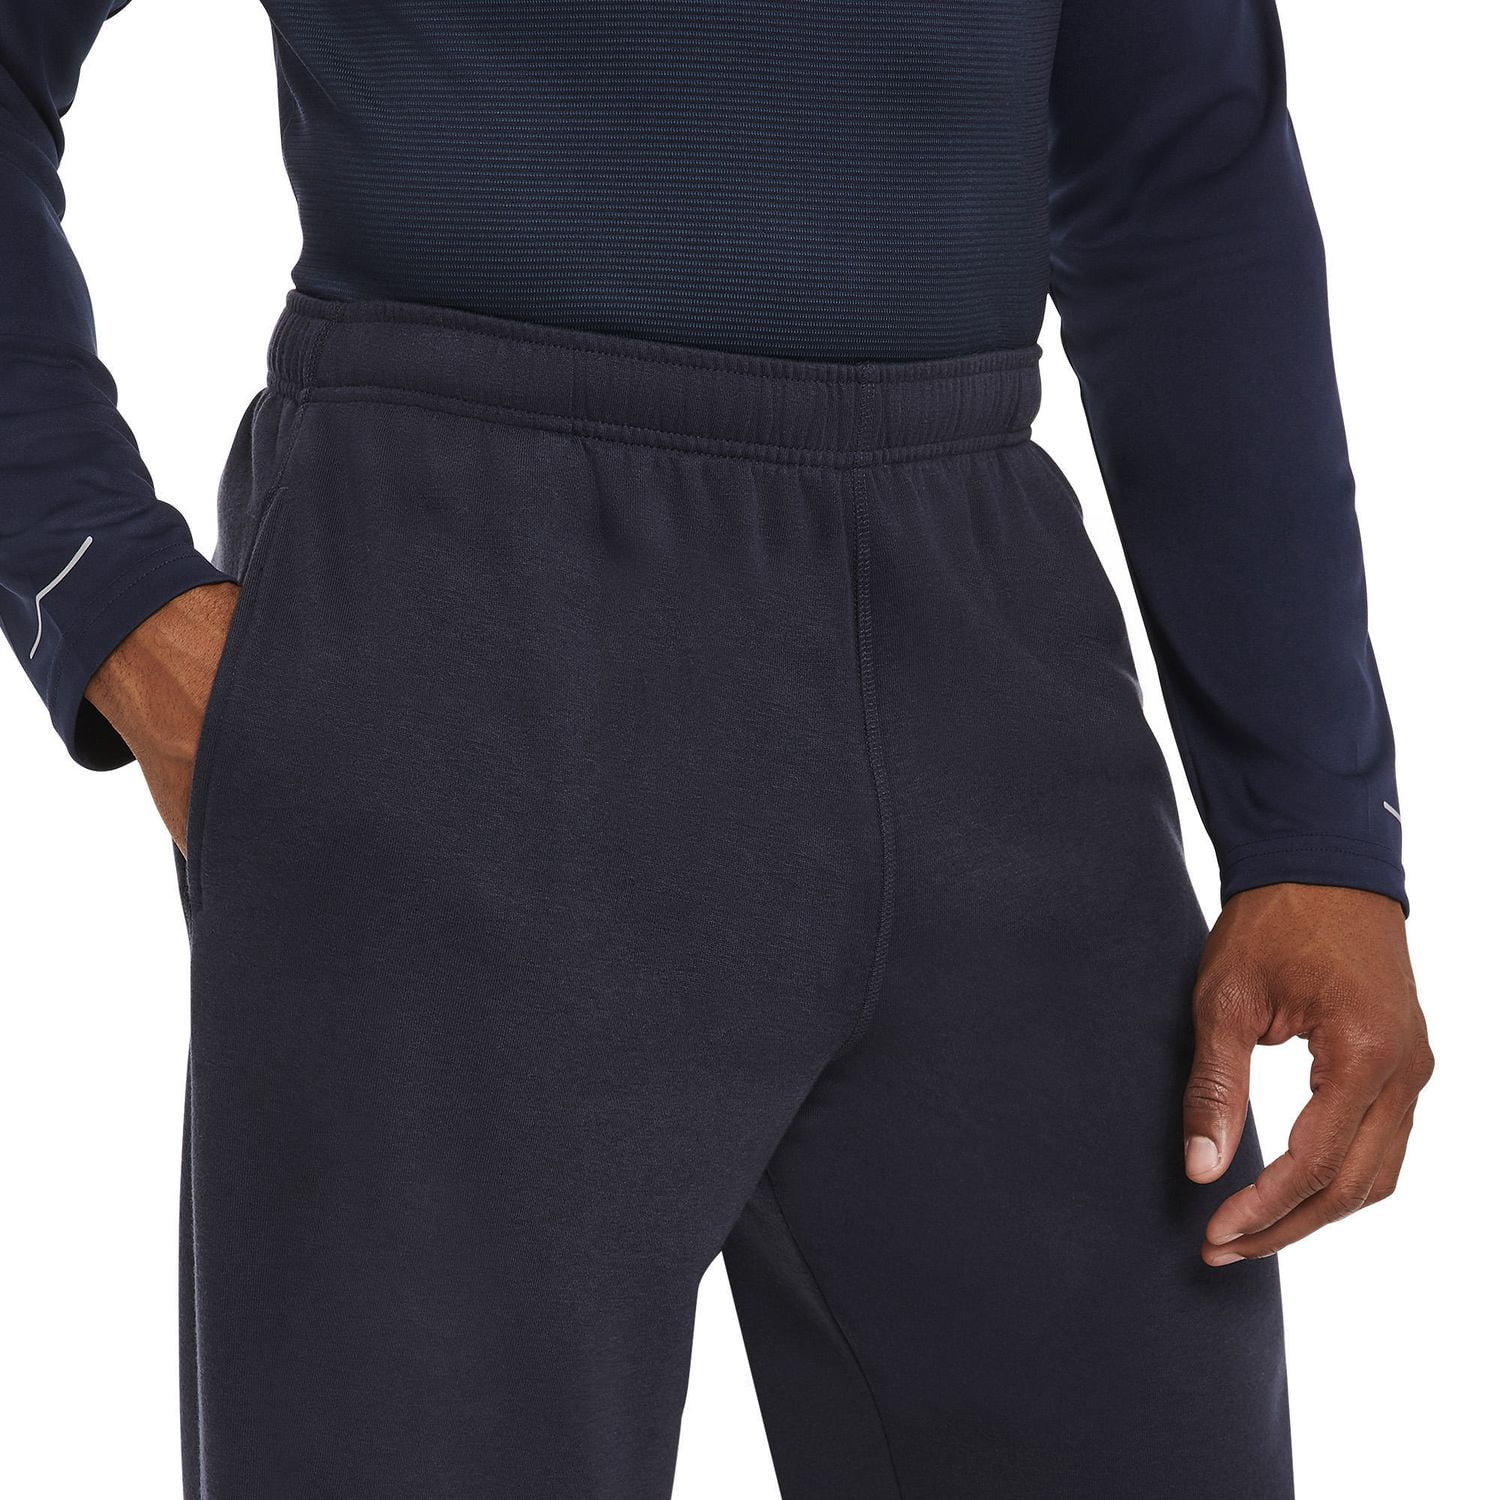 Athletic Works Men's Fleece Pant, Sizes S-2XL